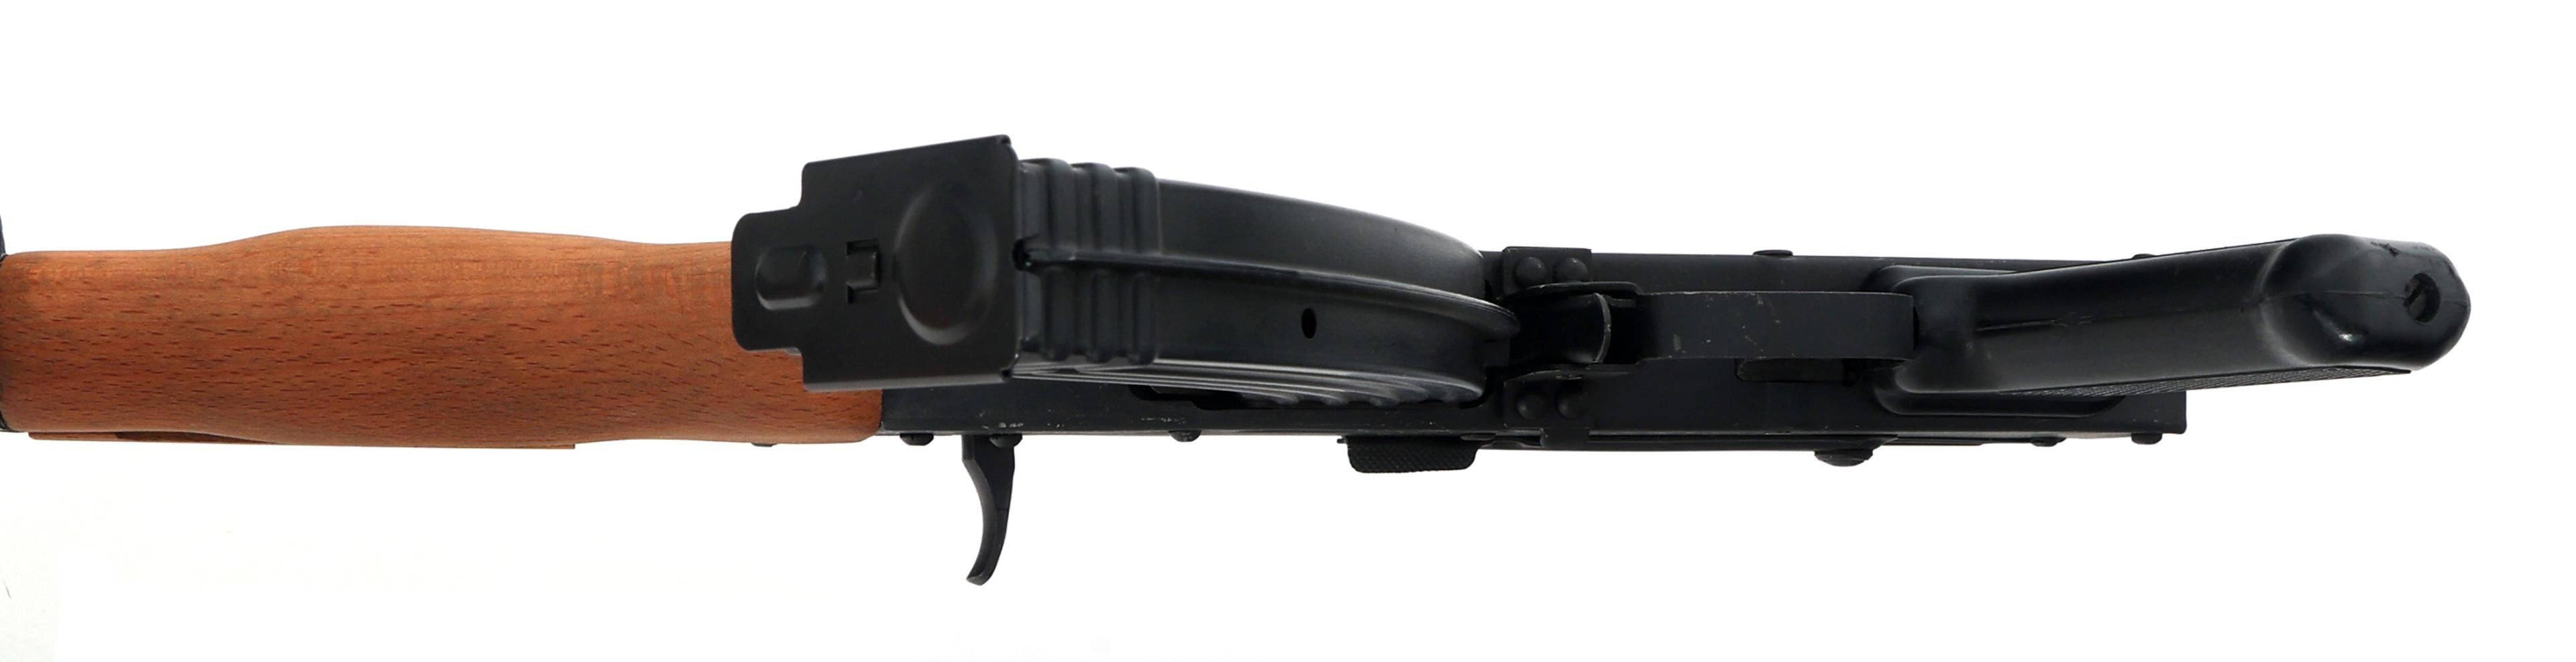 ROMARM MODEL DRACO 7.62x39mm CALIBER PISTOL